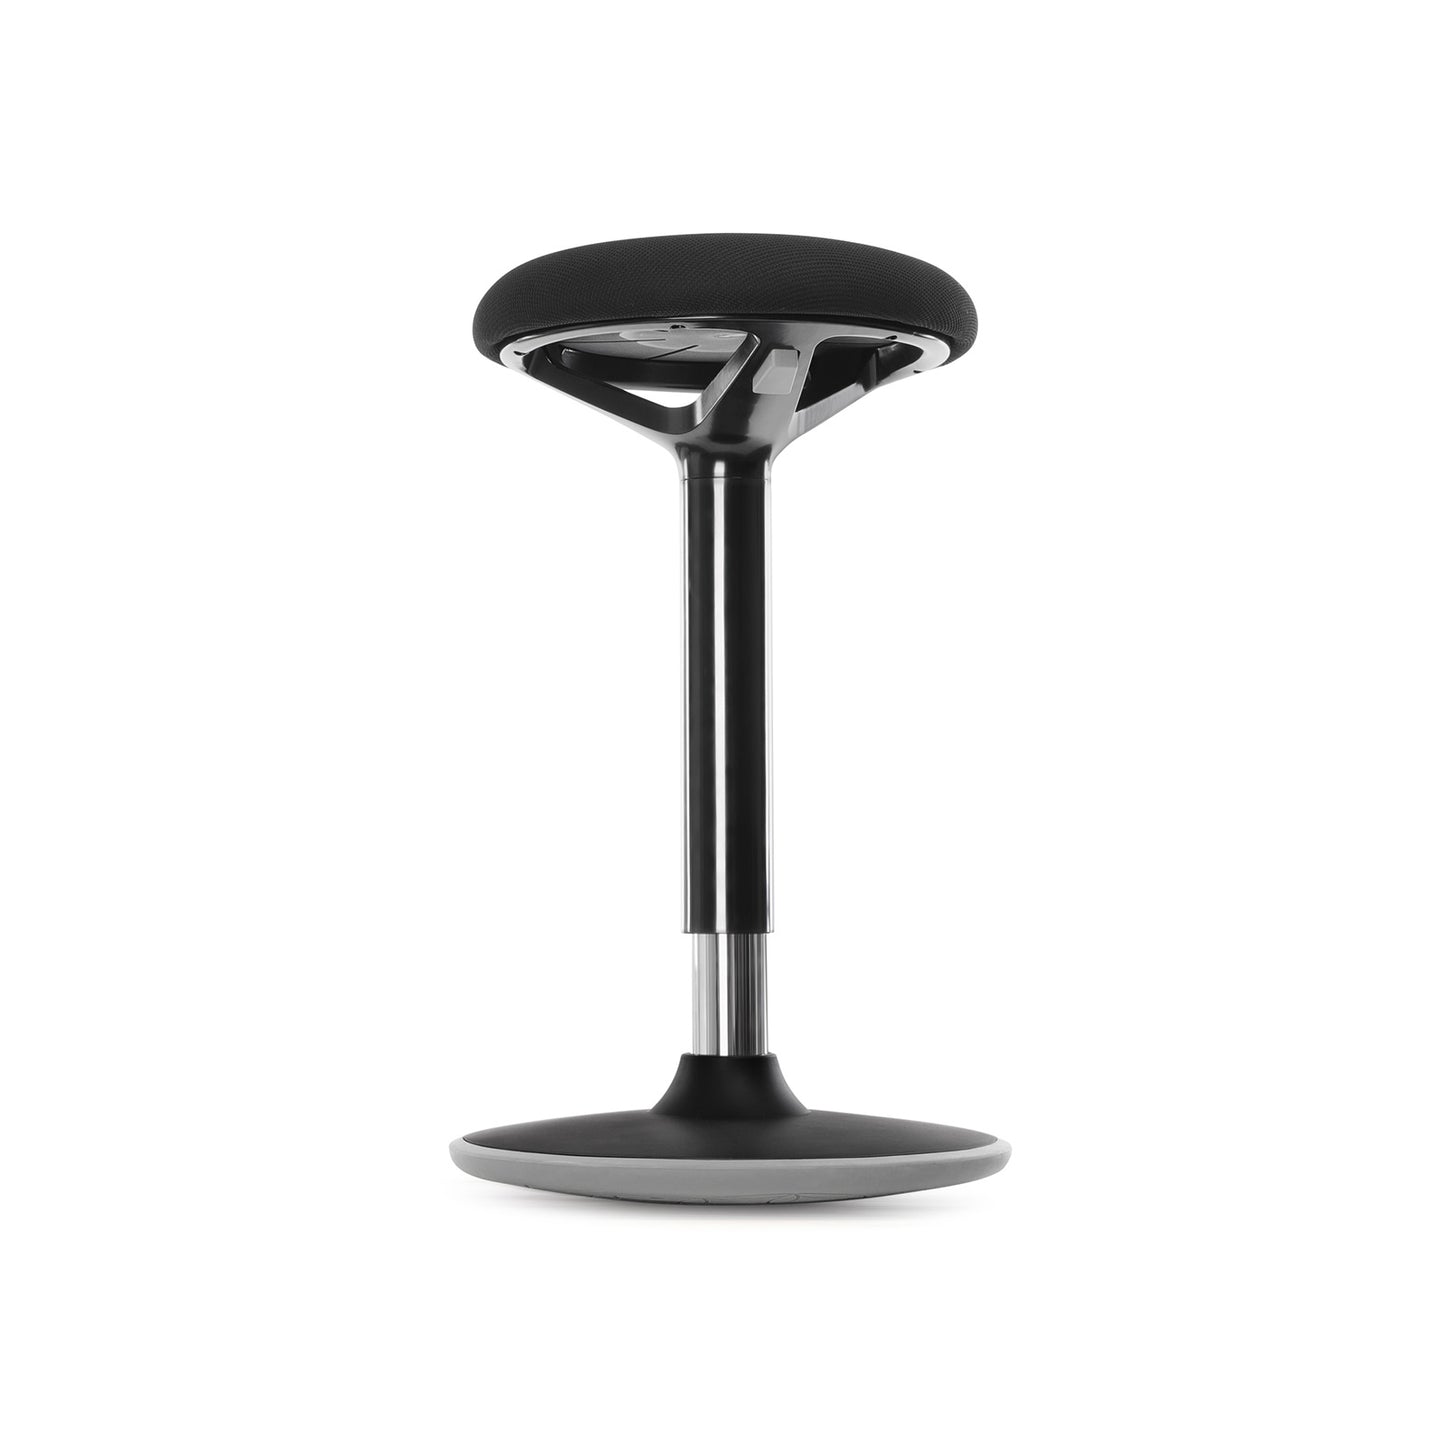 Task stool 50-65 cm Black